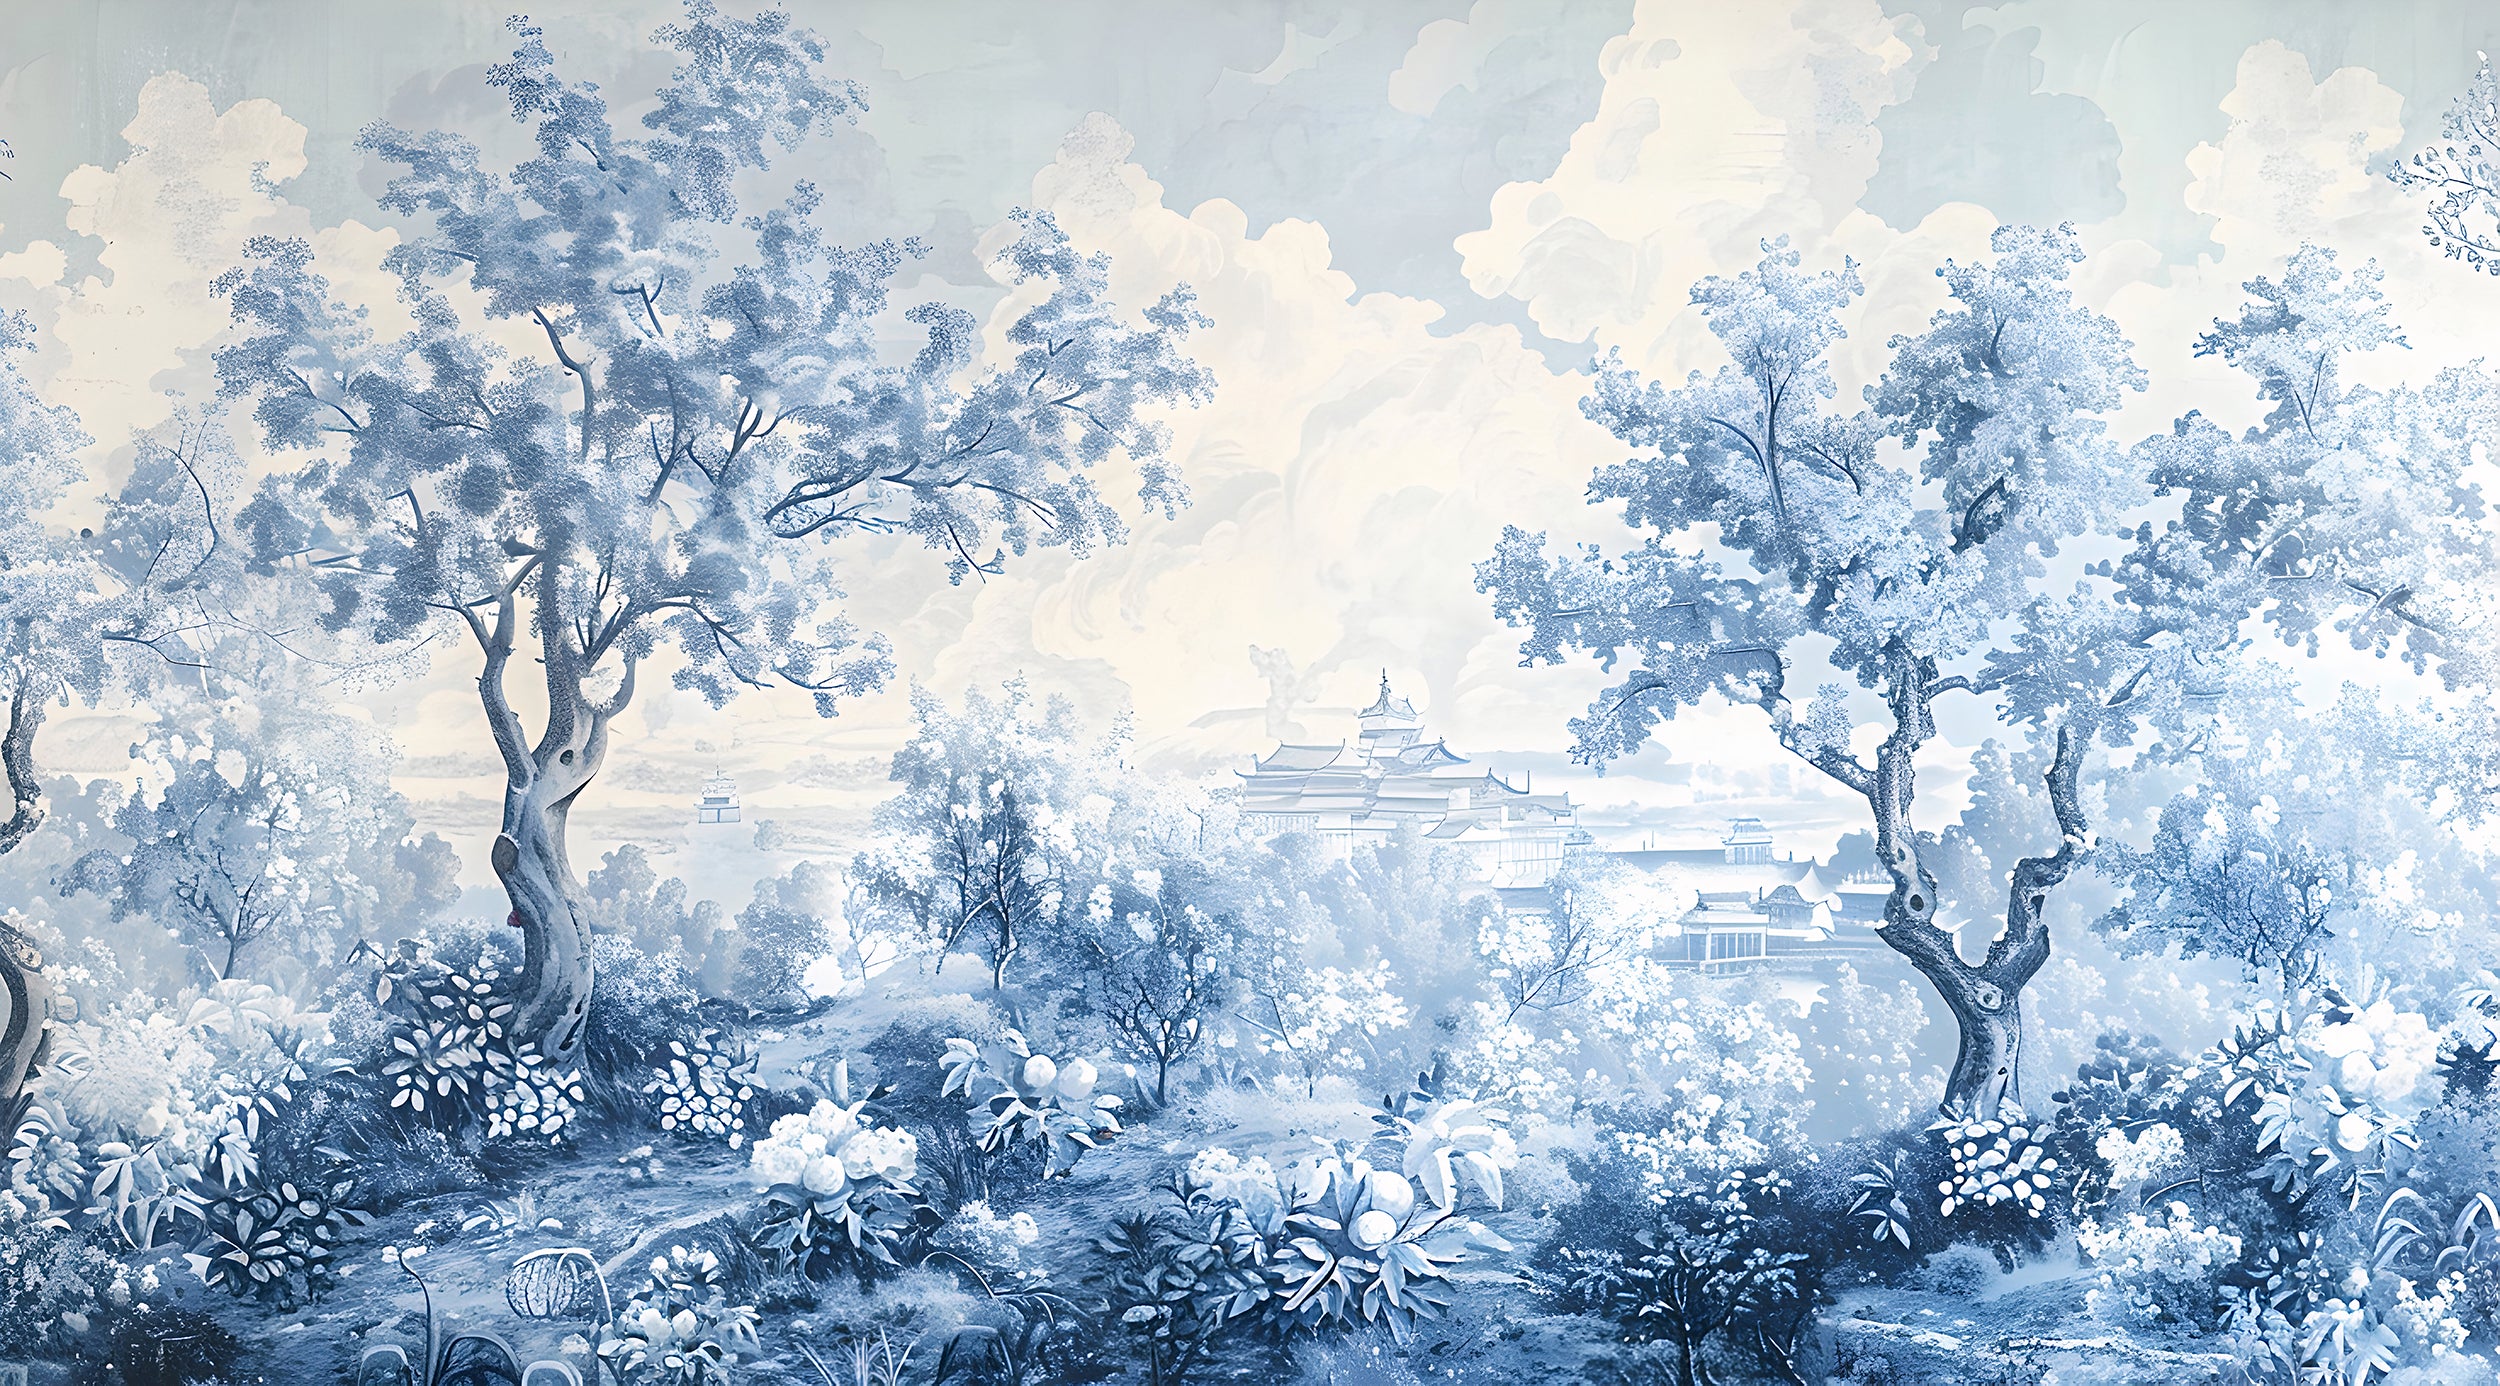 Blue monochrome landscape wallpaper Toile de Jouy style wallpaper